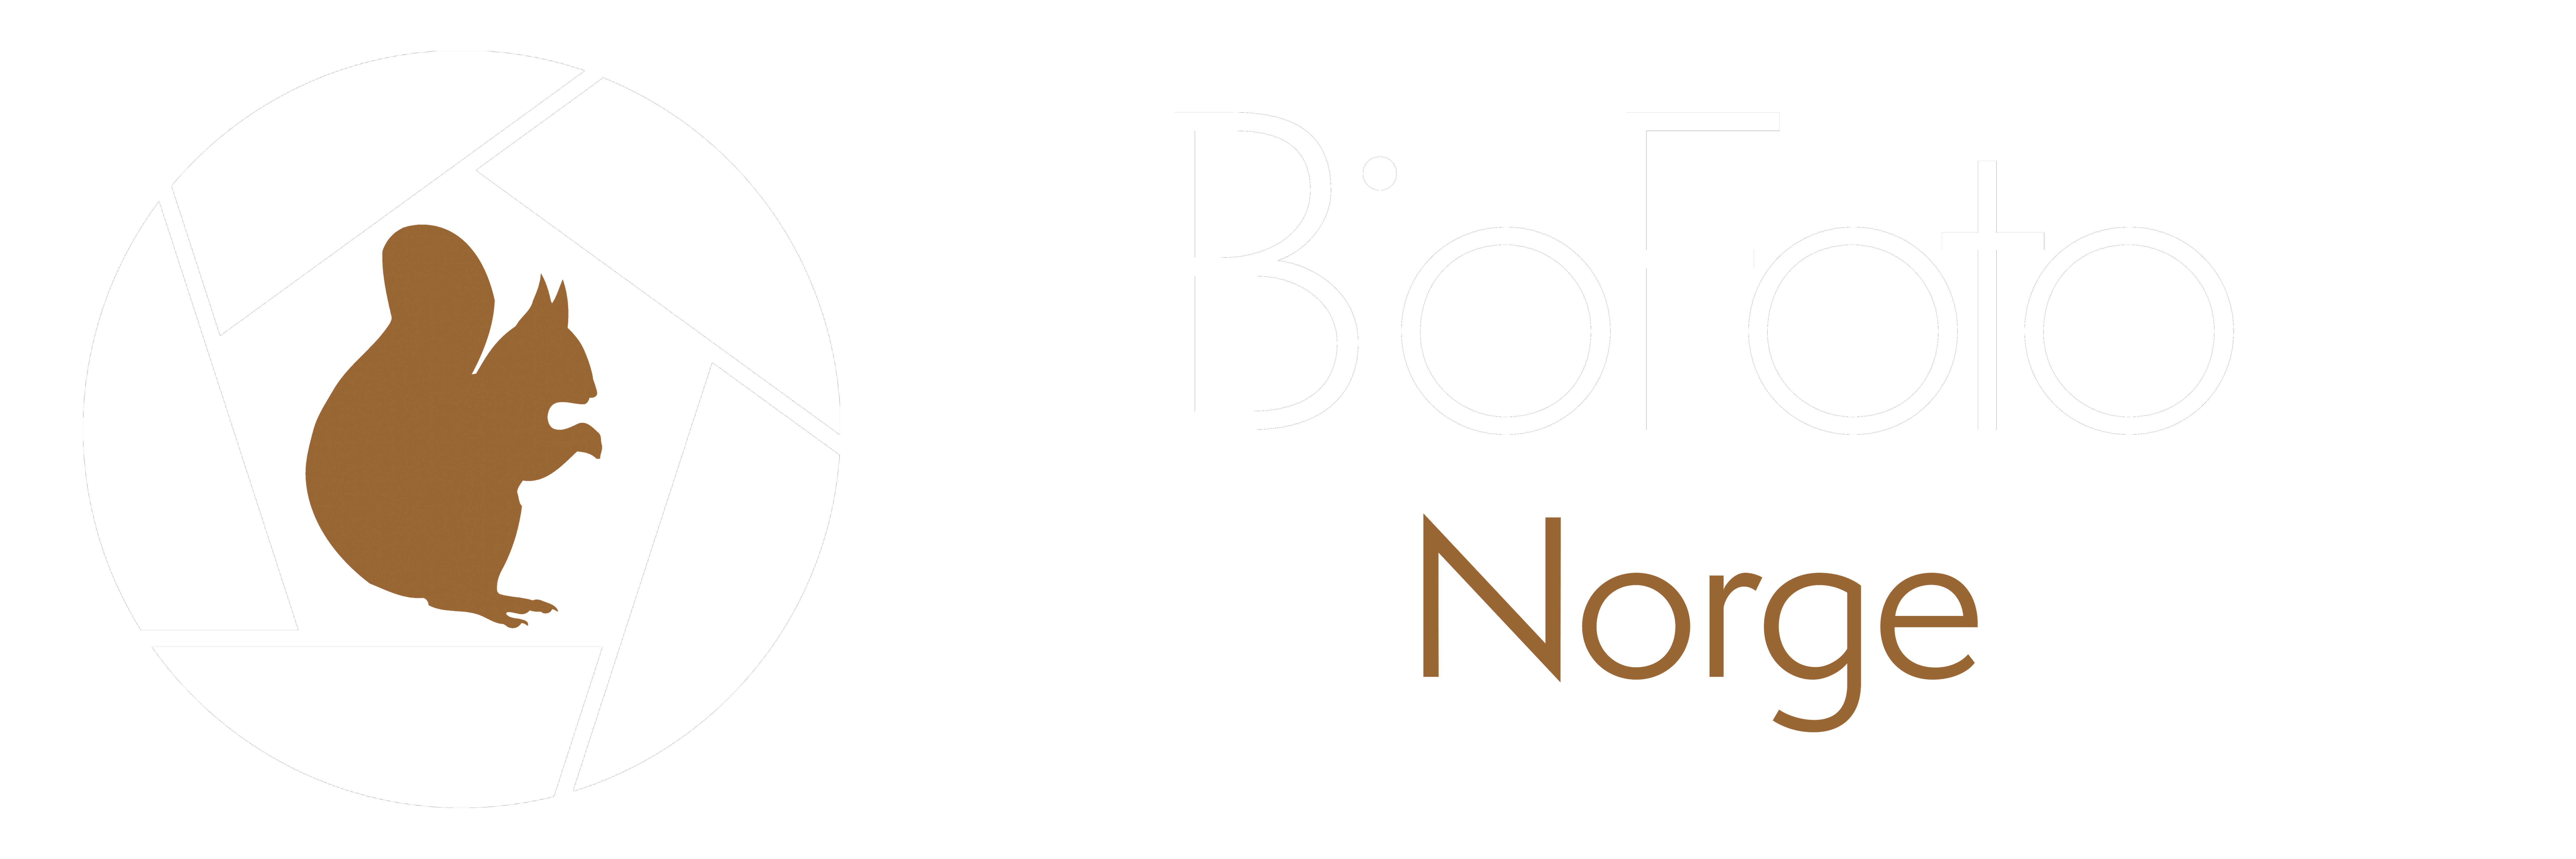 BioFoto - Forening for Naturfotografer